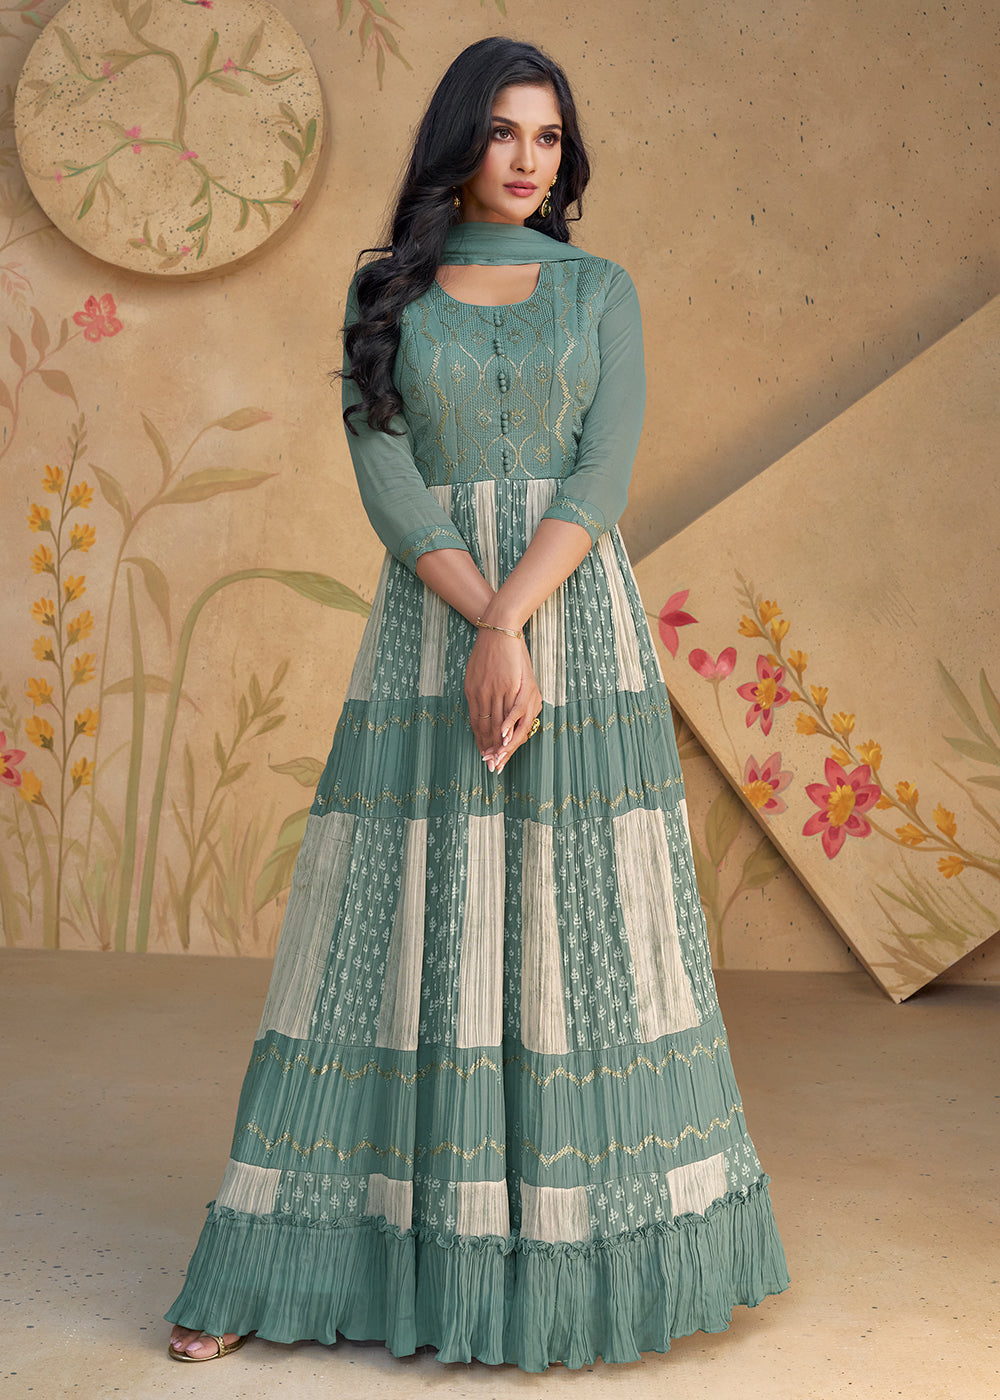 Buy Now Mint Teal Sequins & Thread Wedding Festive Anarkali Dress Online in USA, UK, Australia, New Zealand, Canada & Worldwide at Empress Clothing.